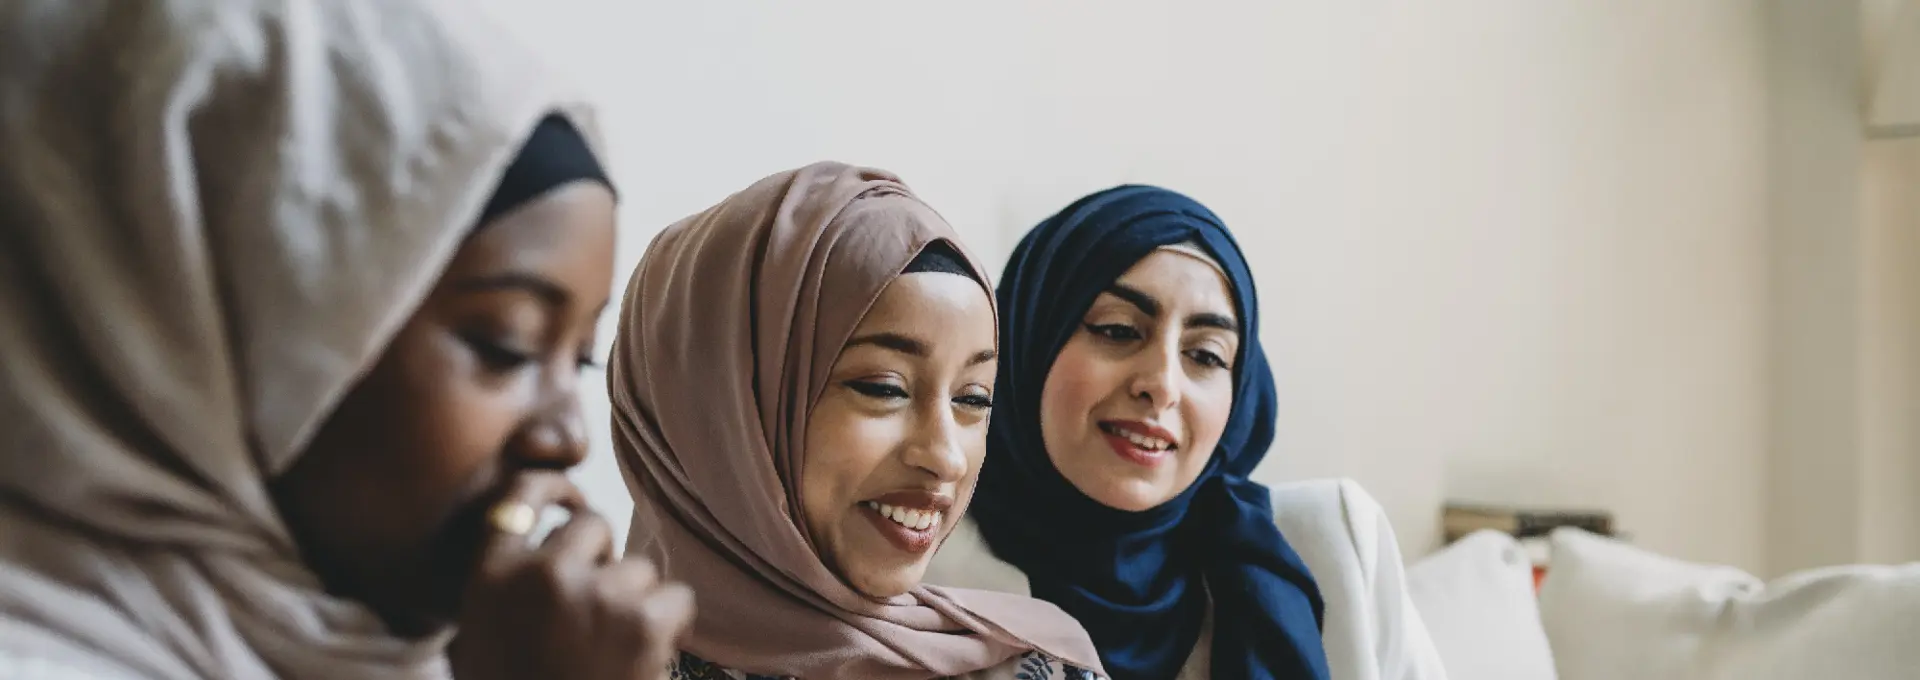 Three Muslim women smiling and using an ipad